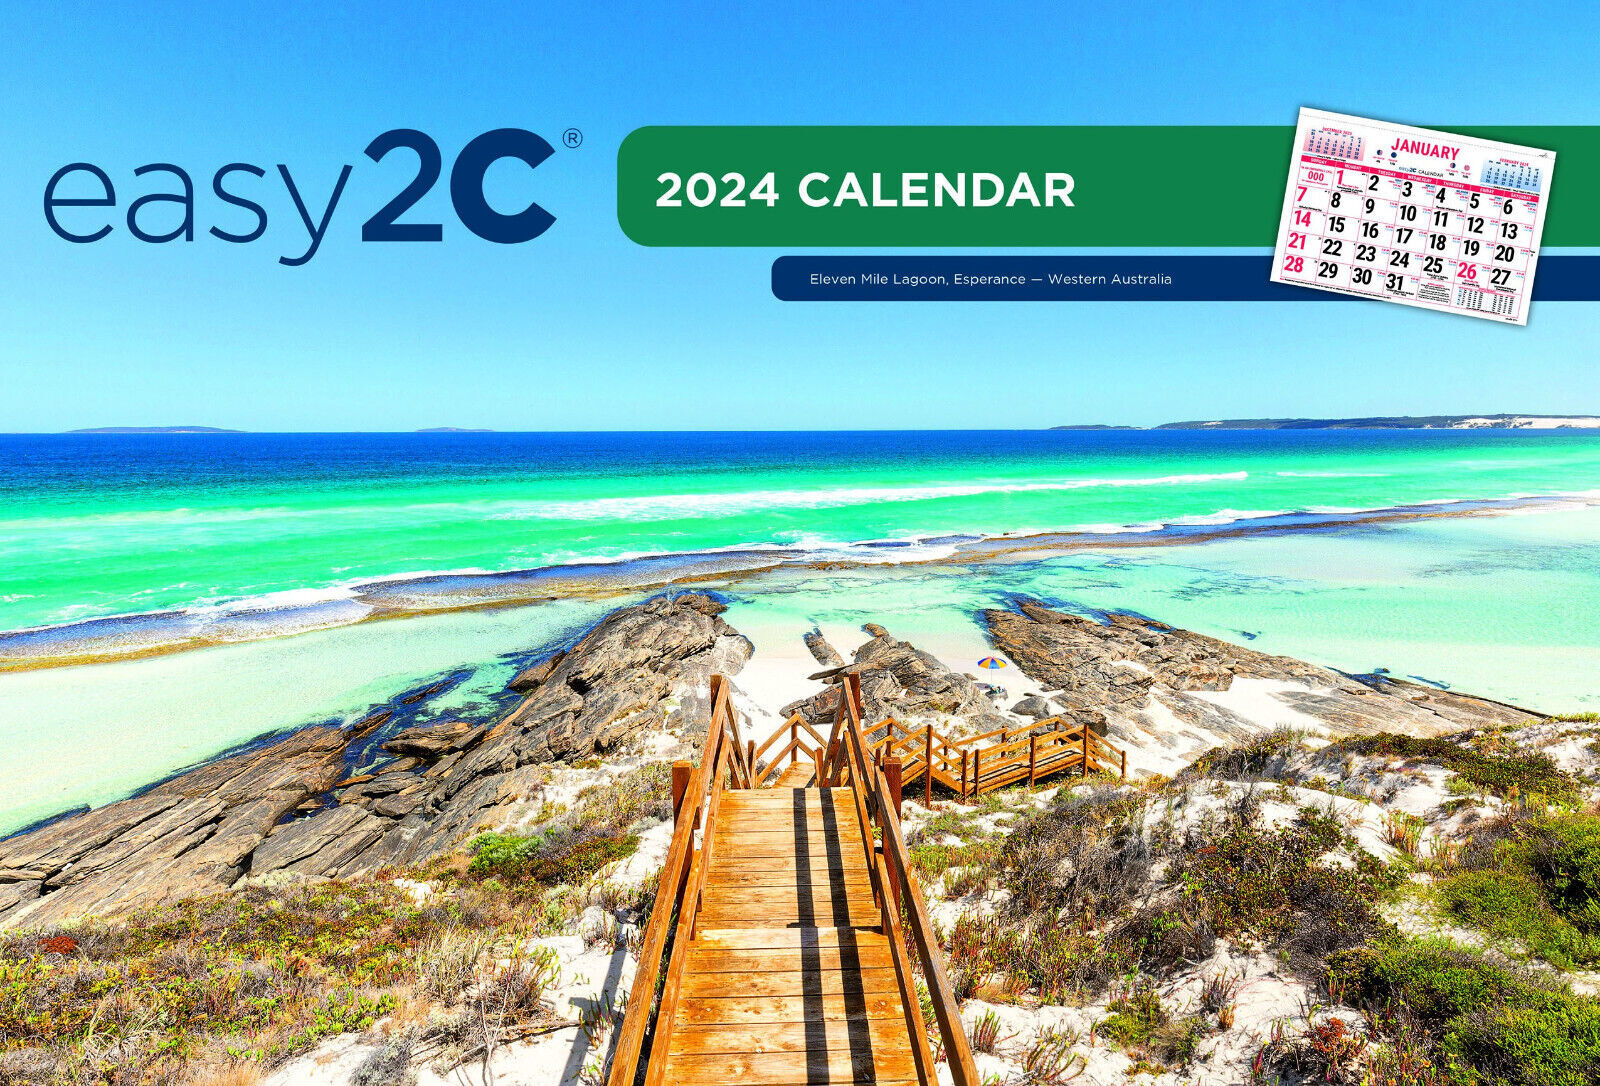 2020 EsE-2C (Easy to See) Calendar, "Australia's #1 Calendar", Postage